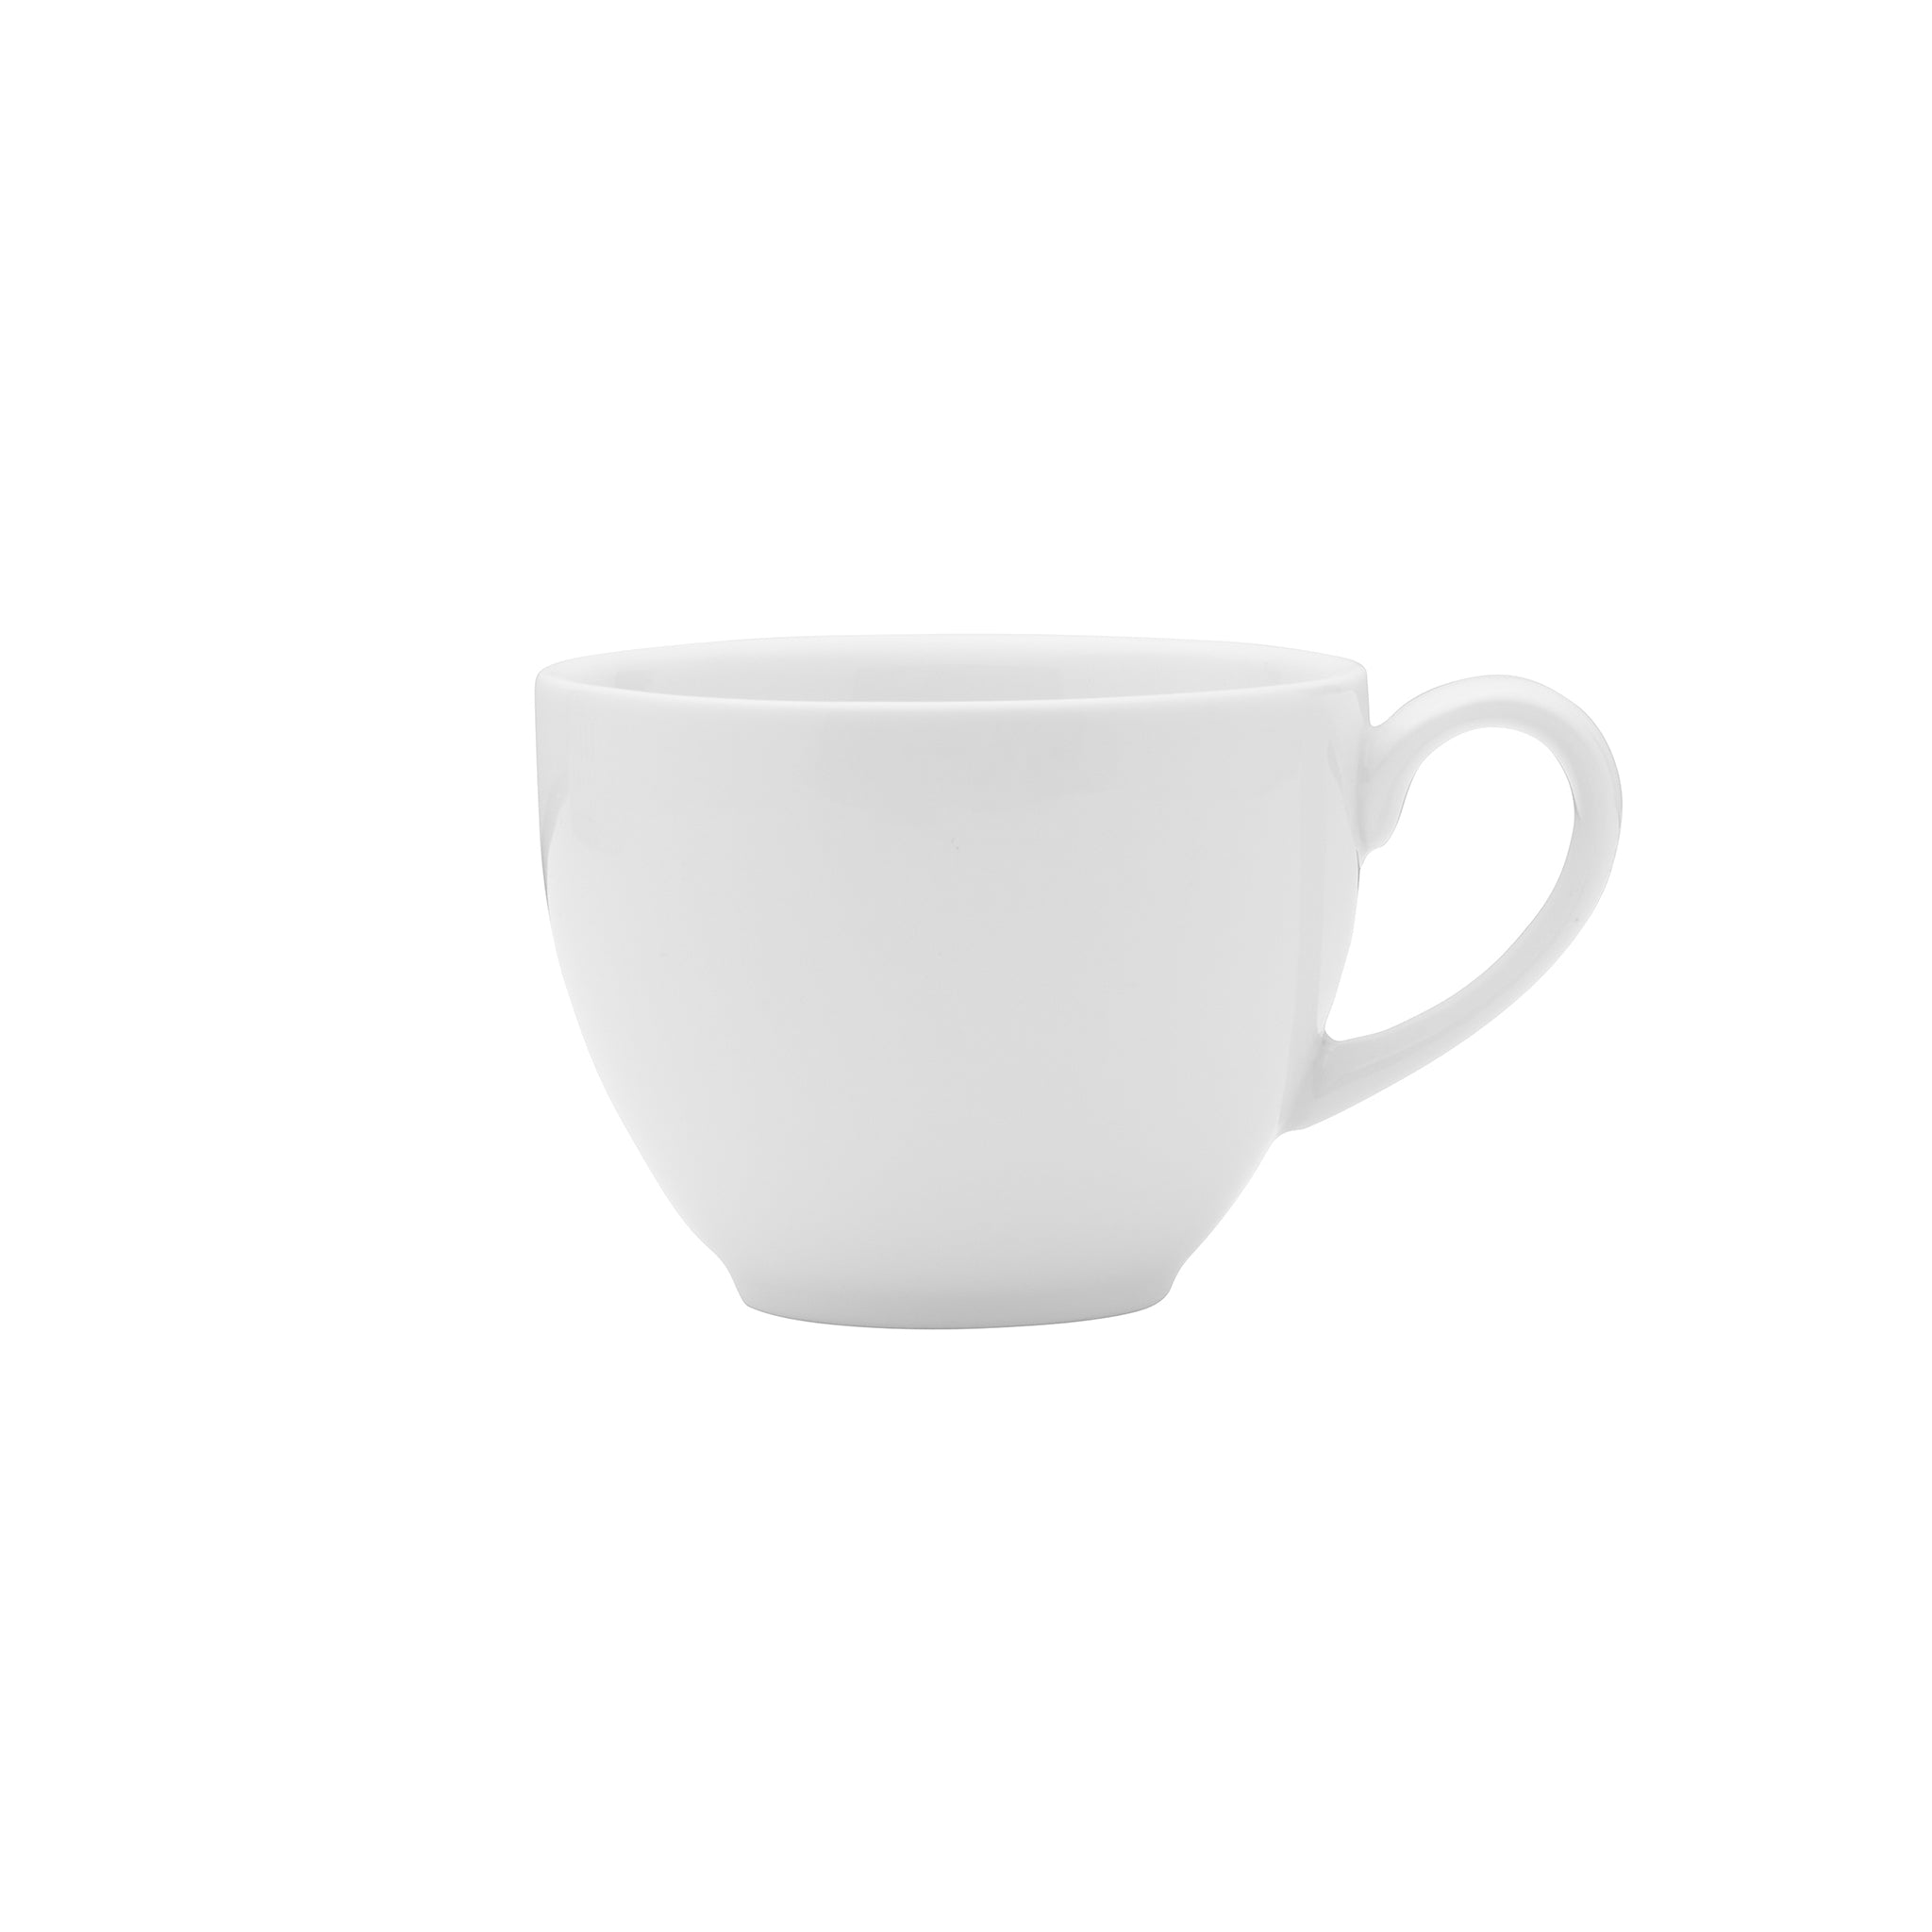 Galleria Porcelain Cup 4.5" / 6.7oz White